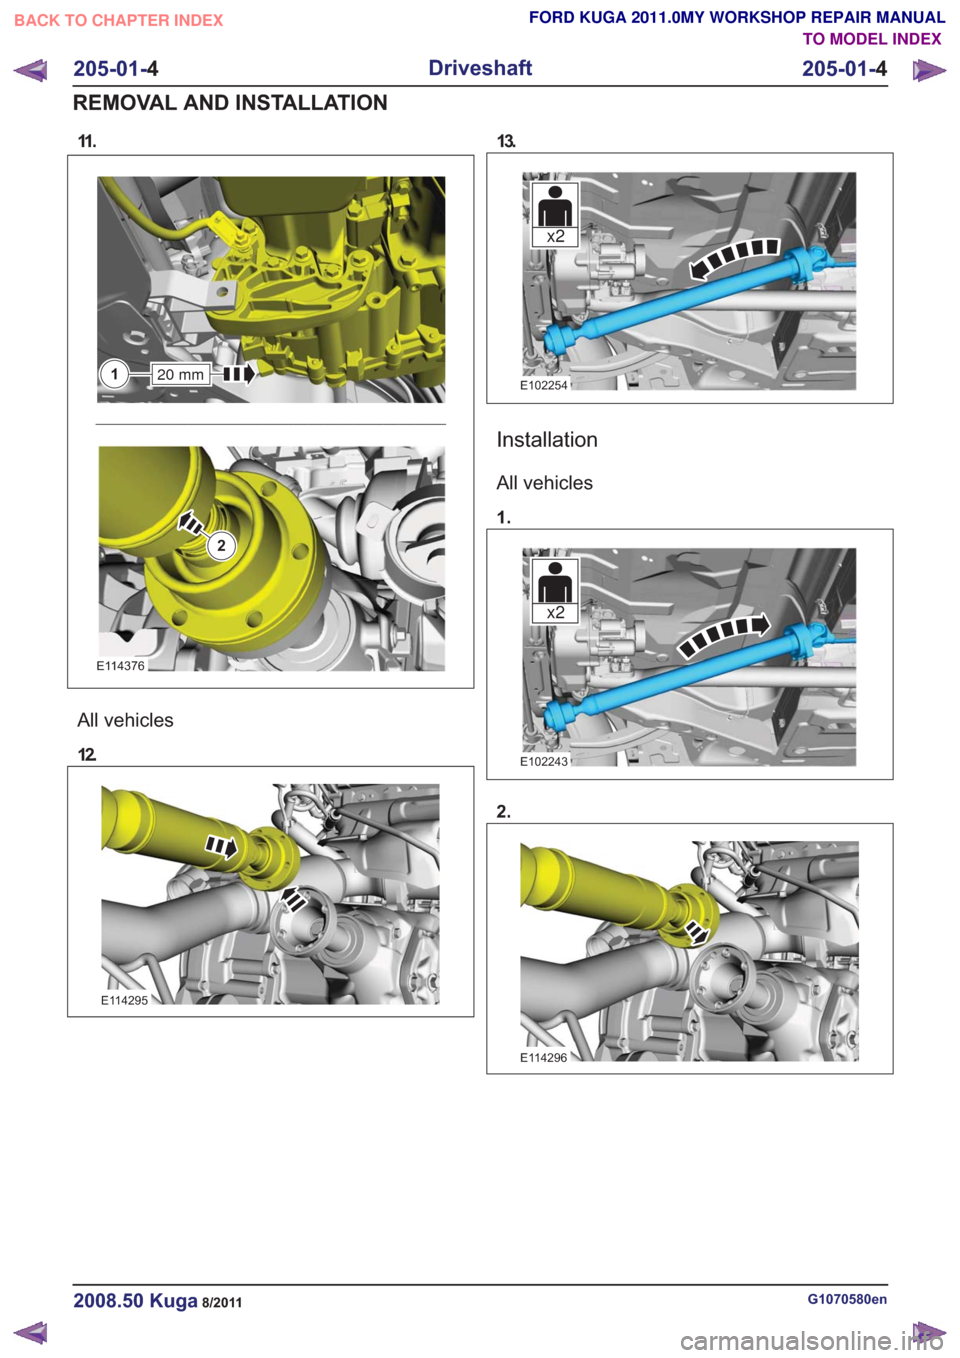 FORD KUGA 2011 1.G Workshop Manual 11 .
20 mm1
2
20 mm1
2
E114376
All vehicles
12.
E114295
13.
x2x2
E102254
Installation
All vehicles
1.
x2x2
E102243
2.
E114296
G1070580en2008.50 Kuga8/2011
205-01-4
Driveshaft
205-01- 4
REMOVAL AND INS